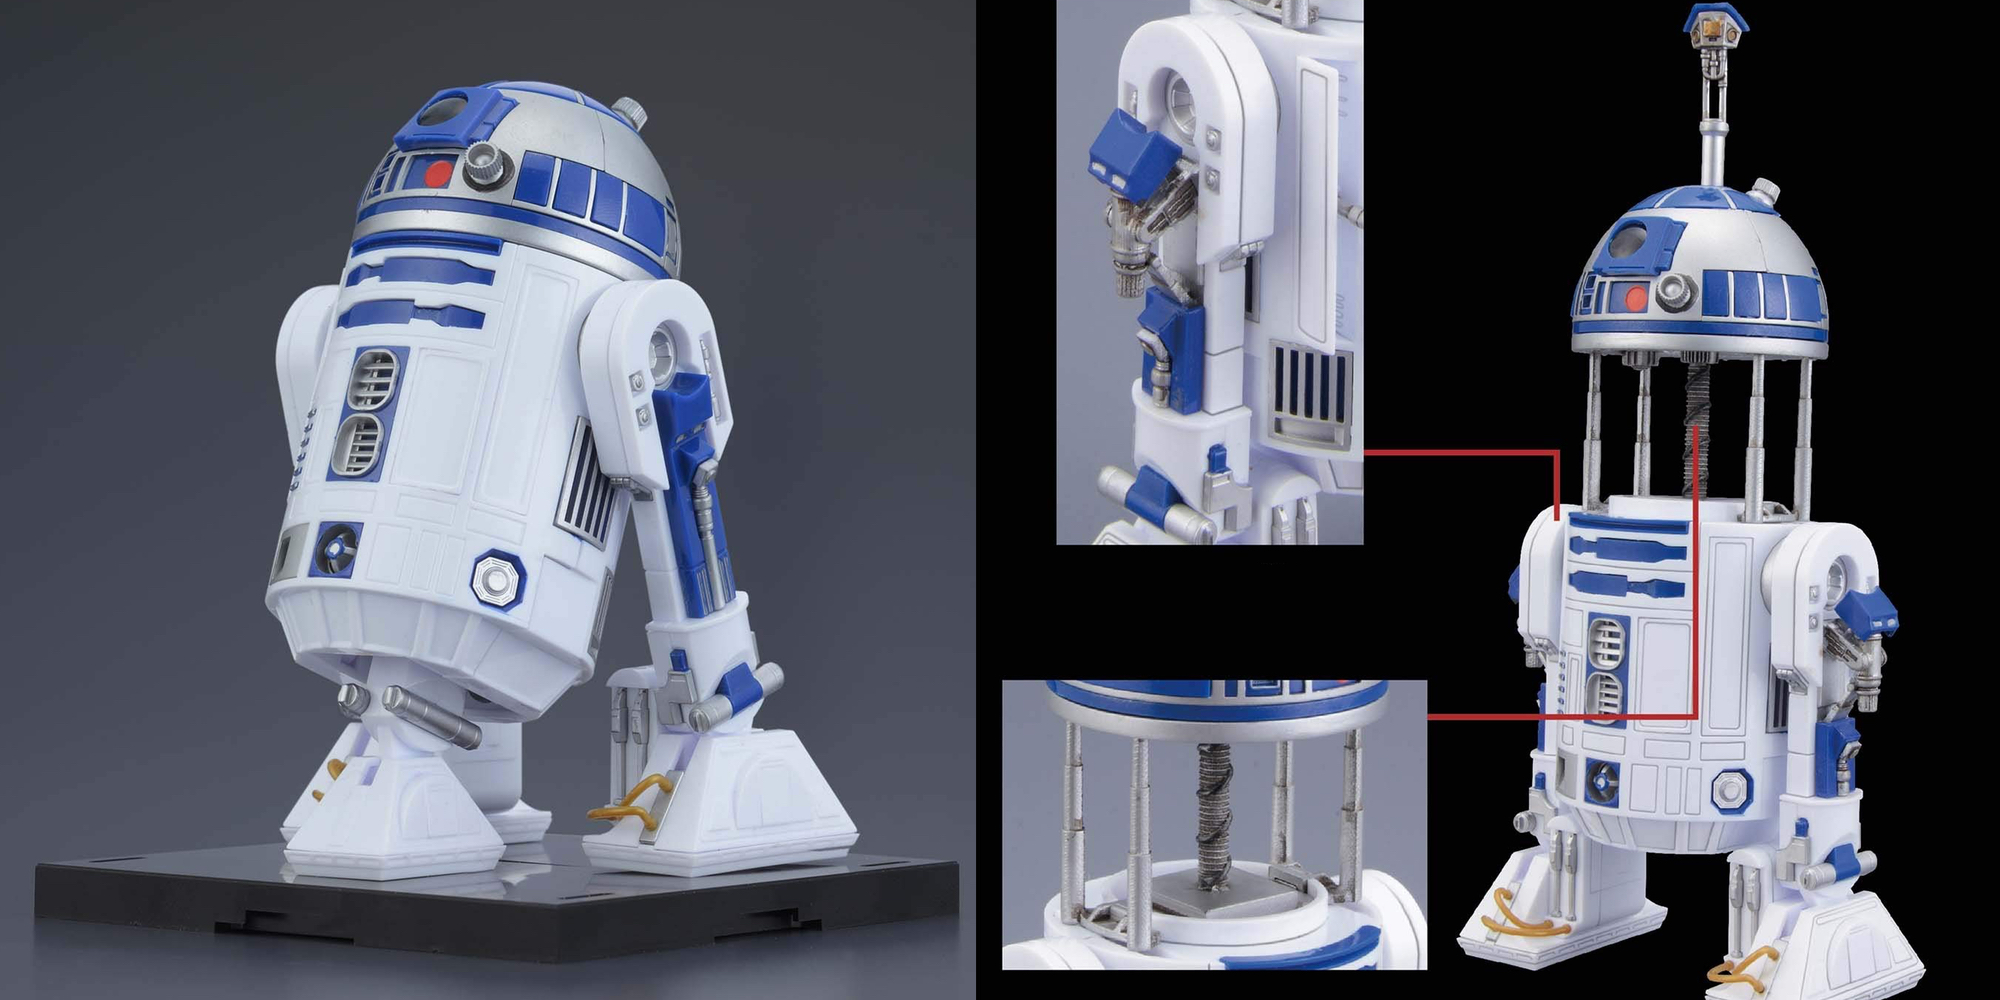 Bandai Spirits Star Wars R2 Q5 1/12 Scale for sale online